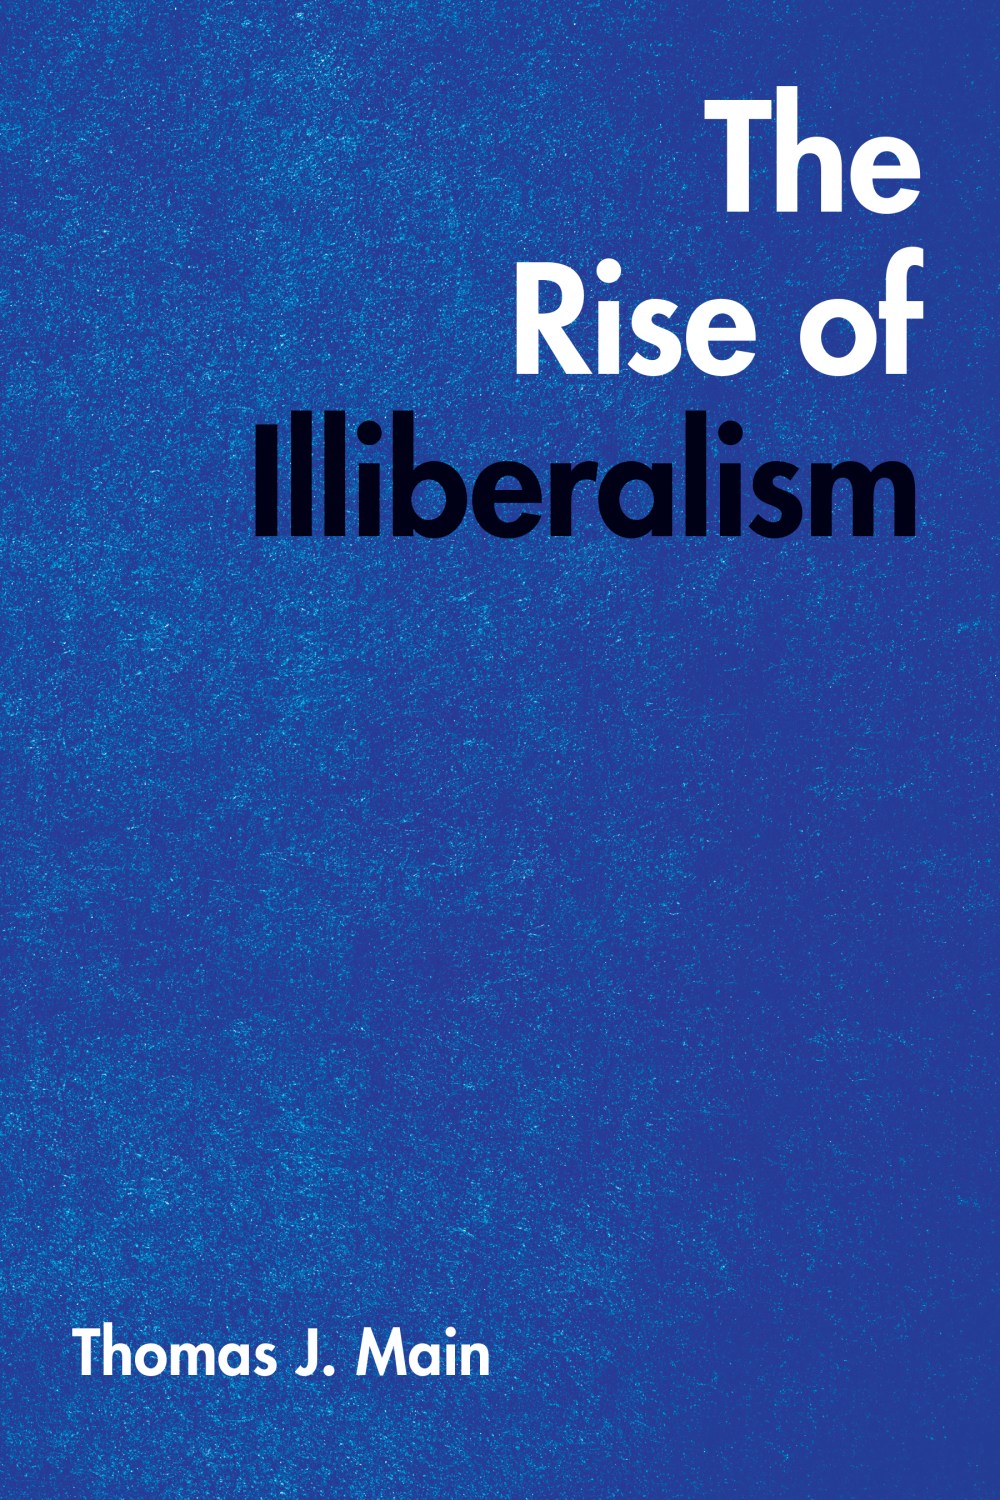 Cvr: The Rise of Illiberalism